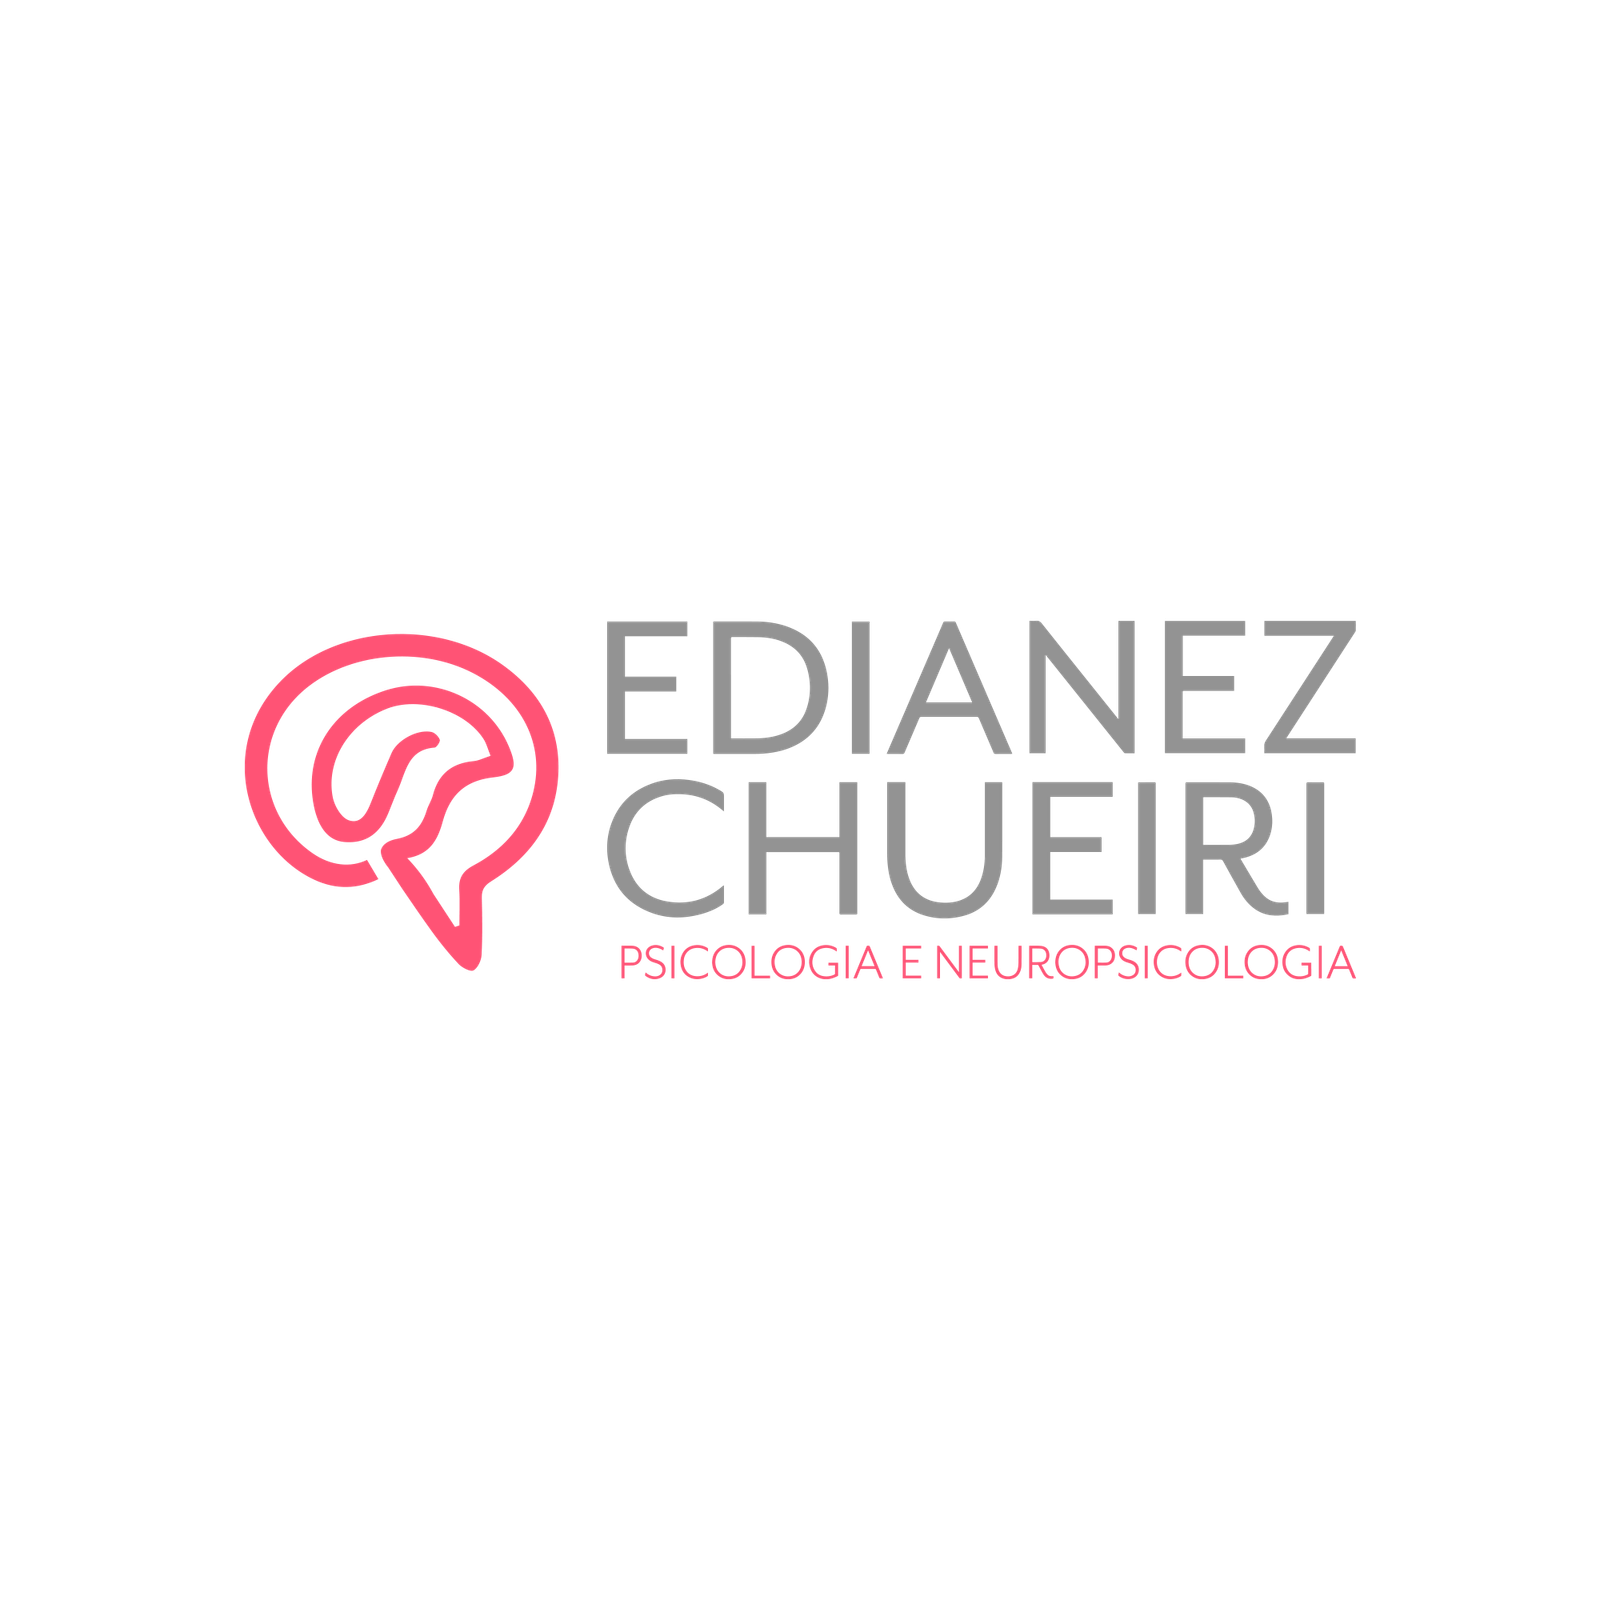 LOGO EDIANEZ CHUEIRI 2019